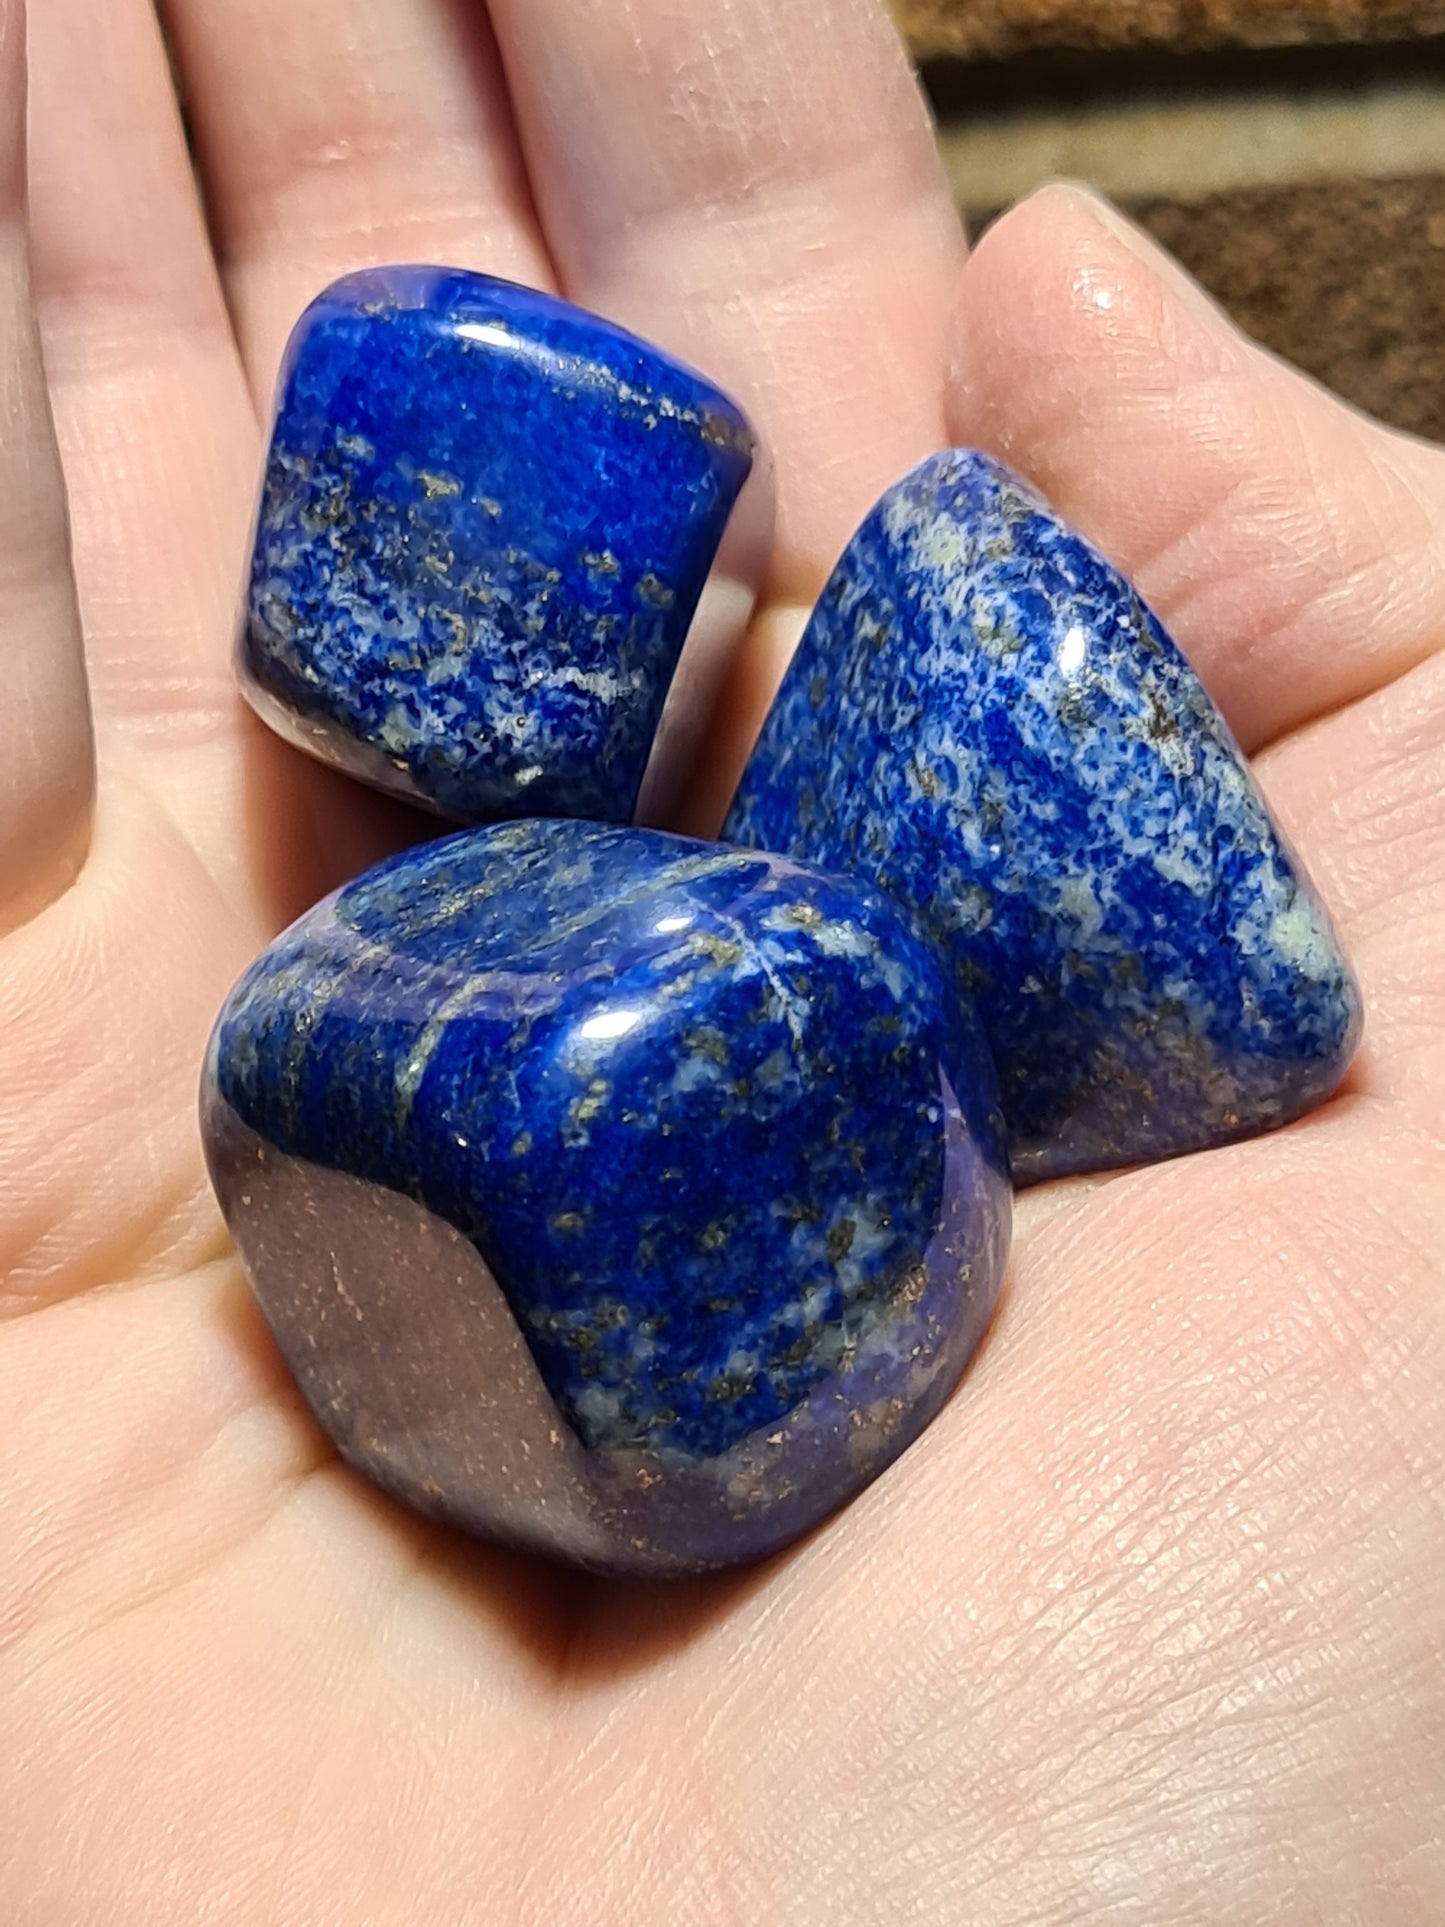 Large size lapis lazuli tumbles 30-40+grams